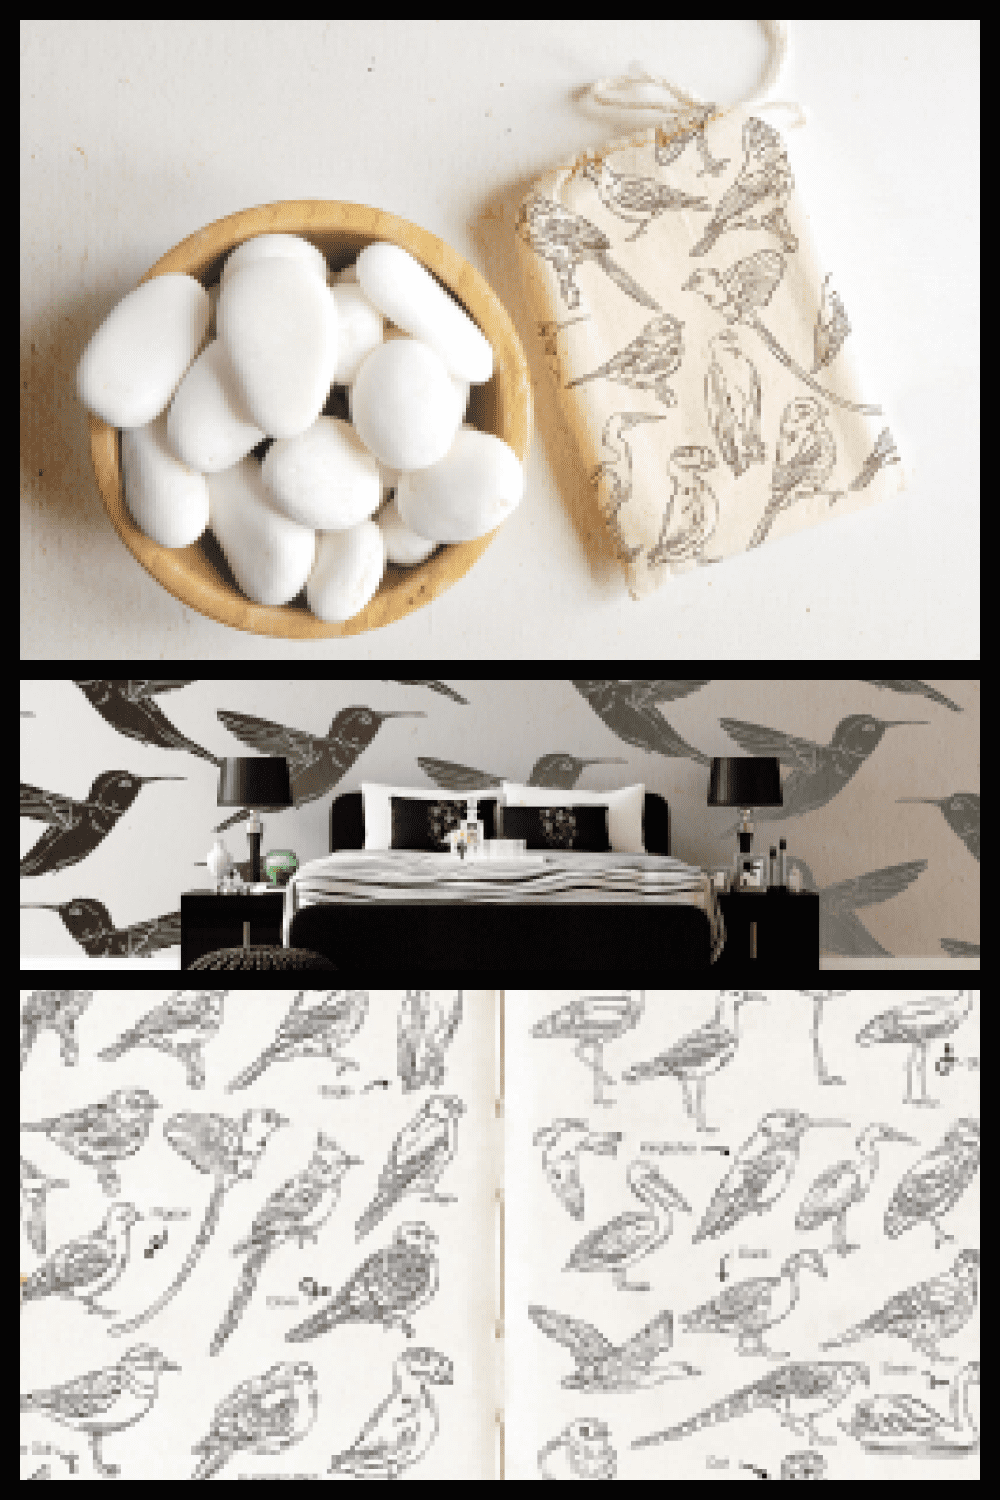 Hand Drawn Birds Vector Illustrations Vol.1 - MasterBundles - Pinterest Collage Image.